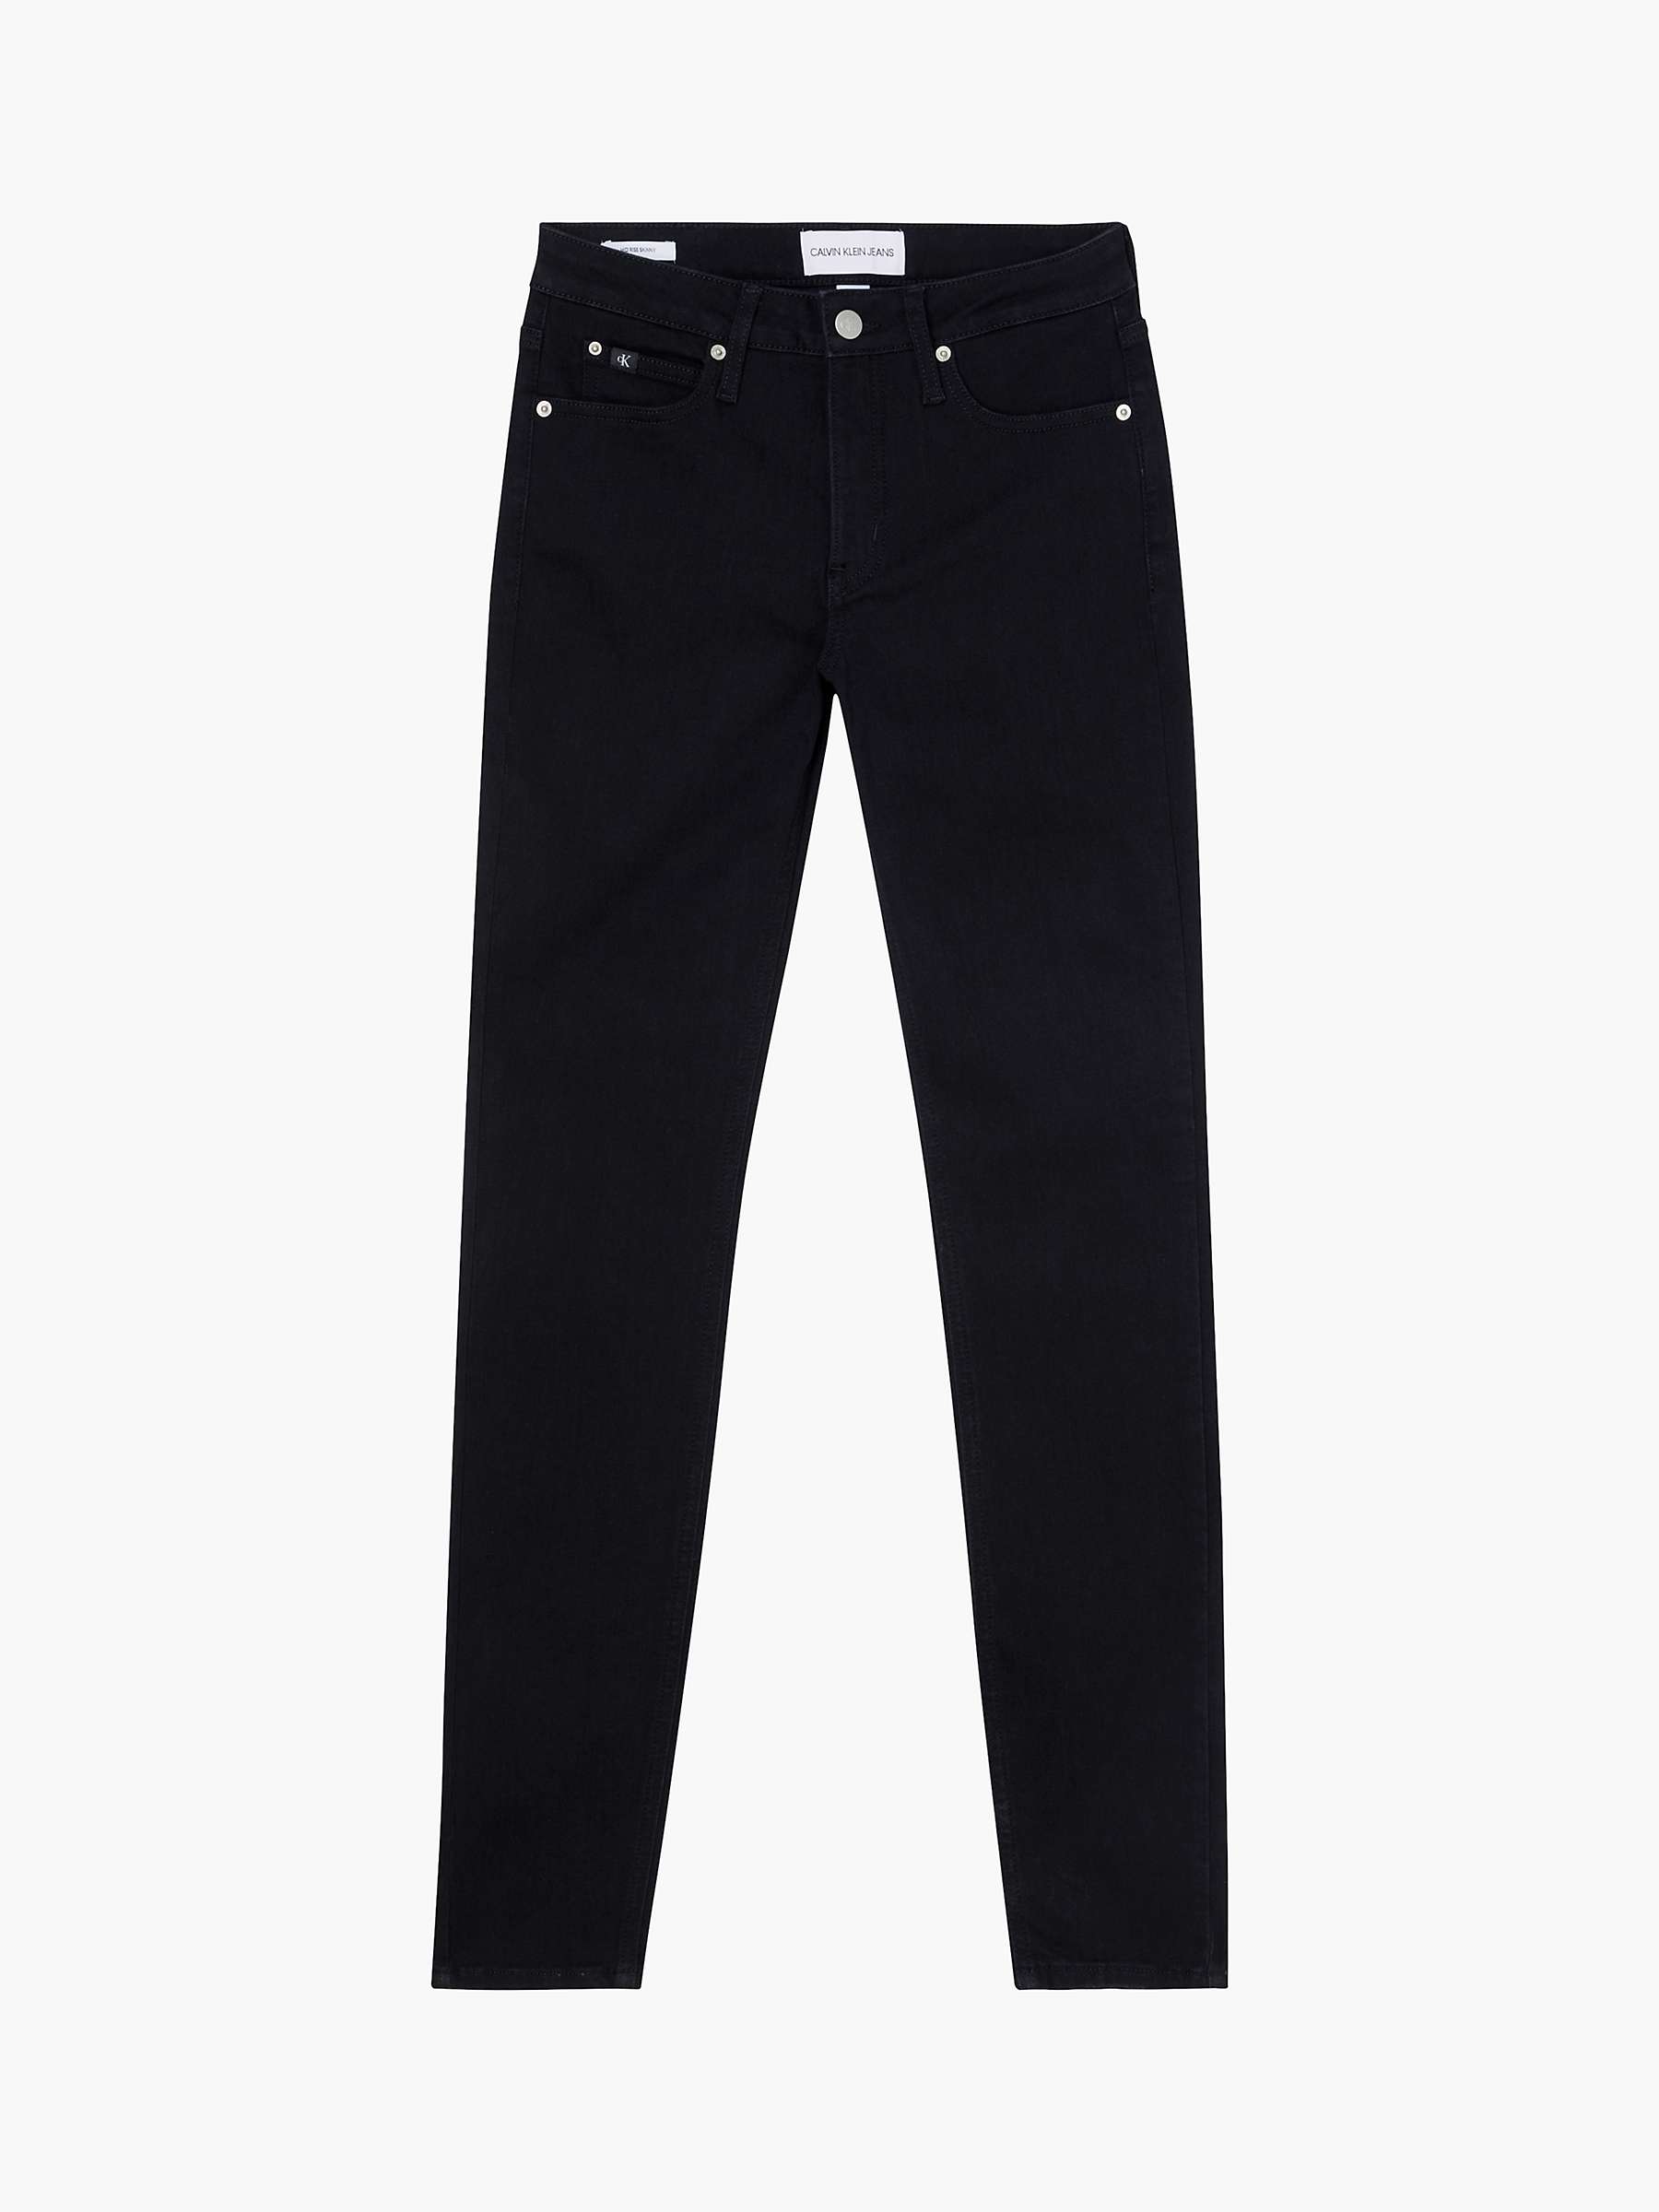 Buy Calvin Klein Mid Rise Skinny Jeans, Black Online at johnlewis.com